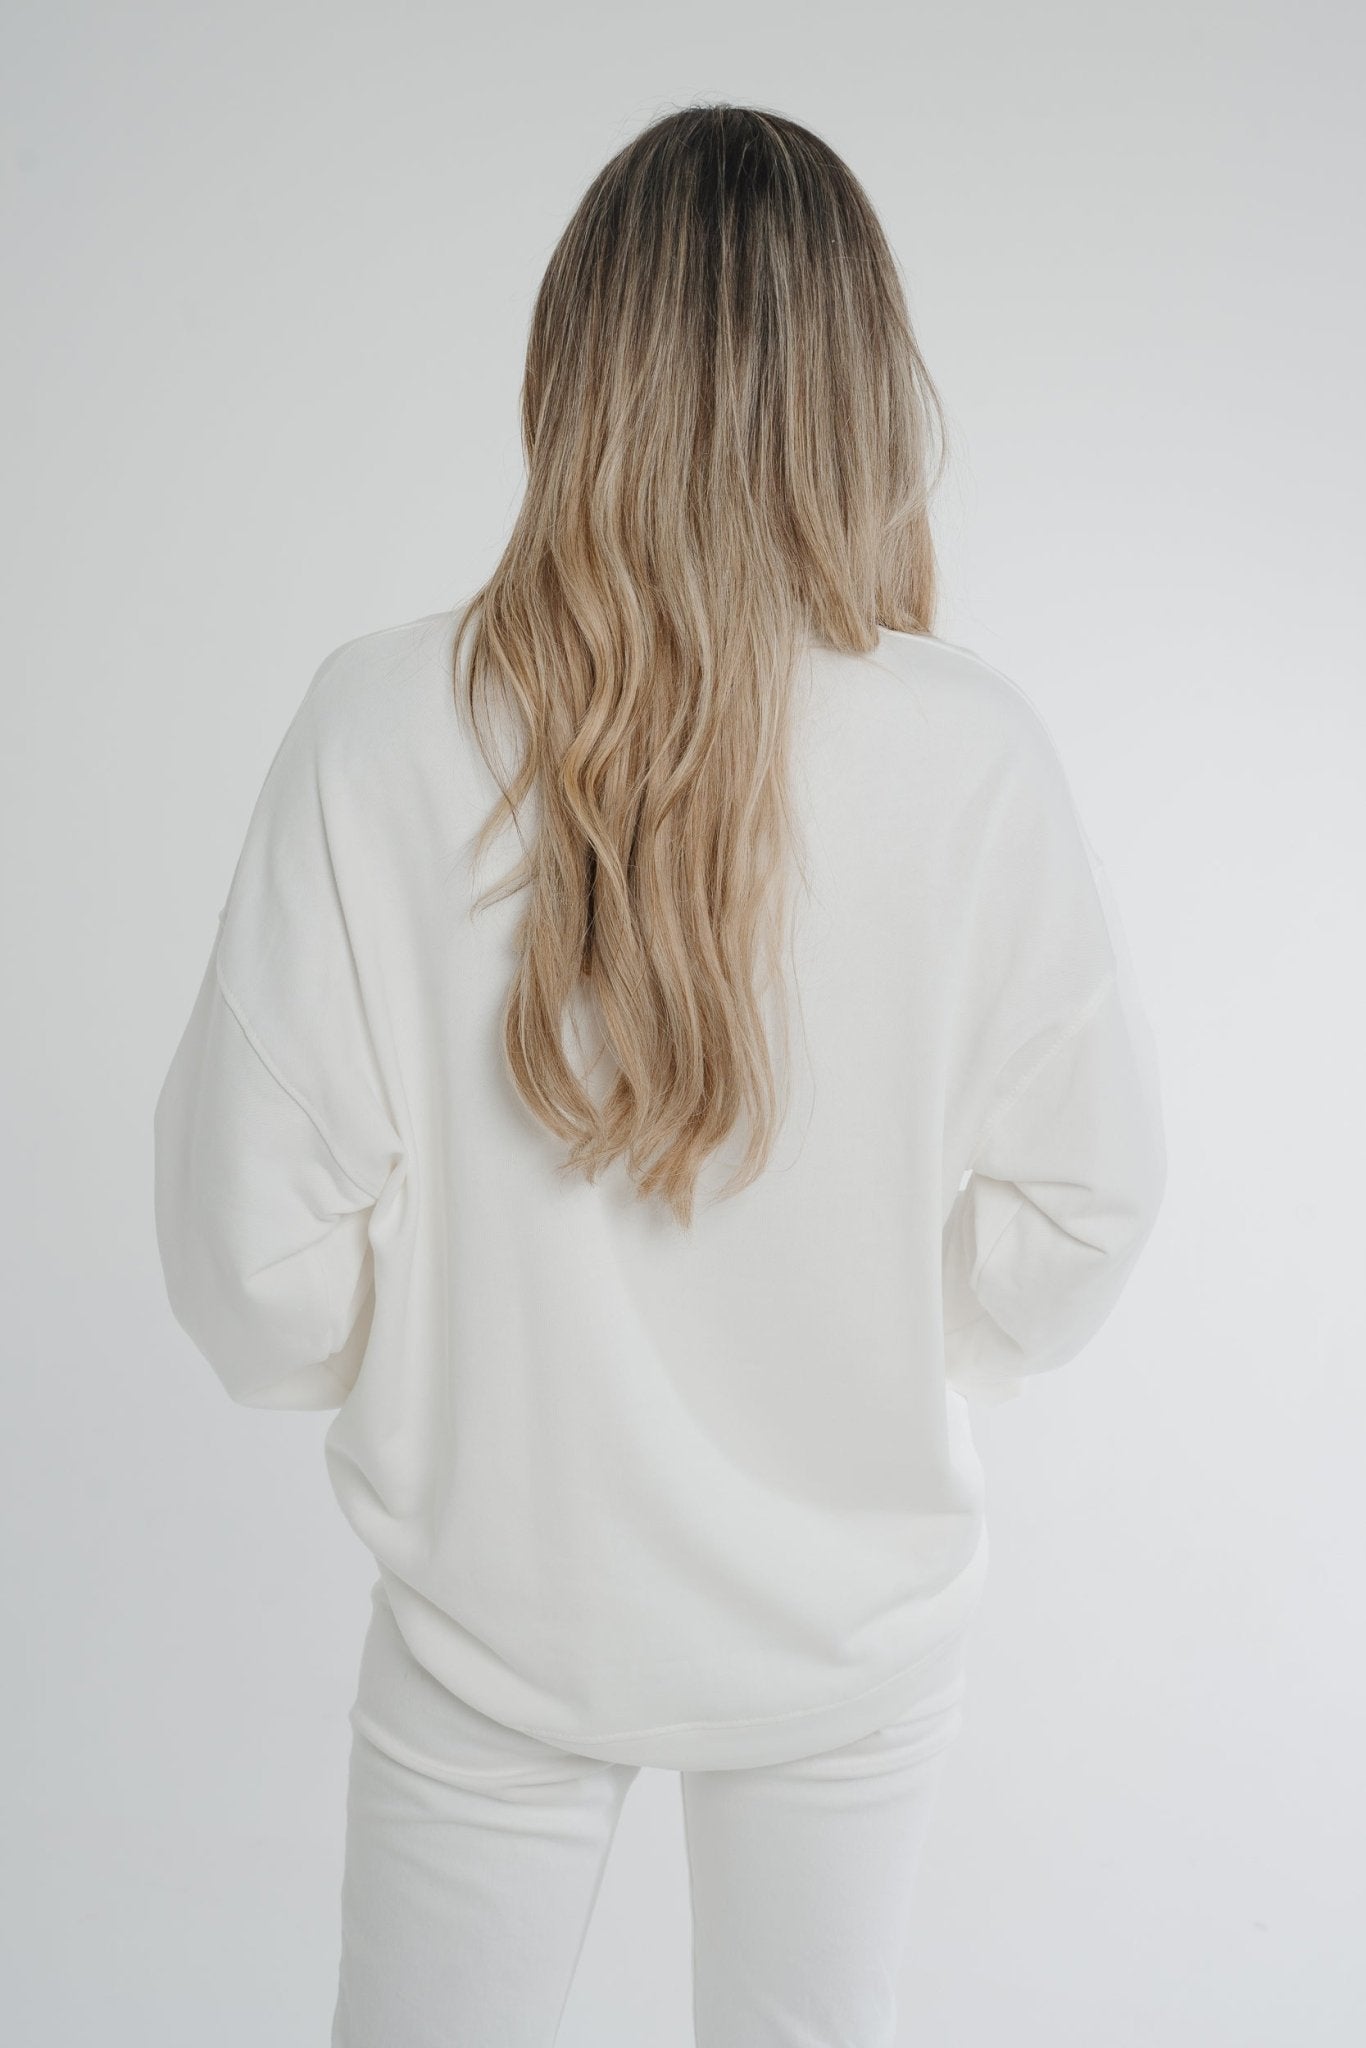 Melanie Leopard Print Sweatshirt In White - The Walk in Wardrobe